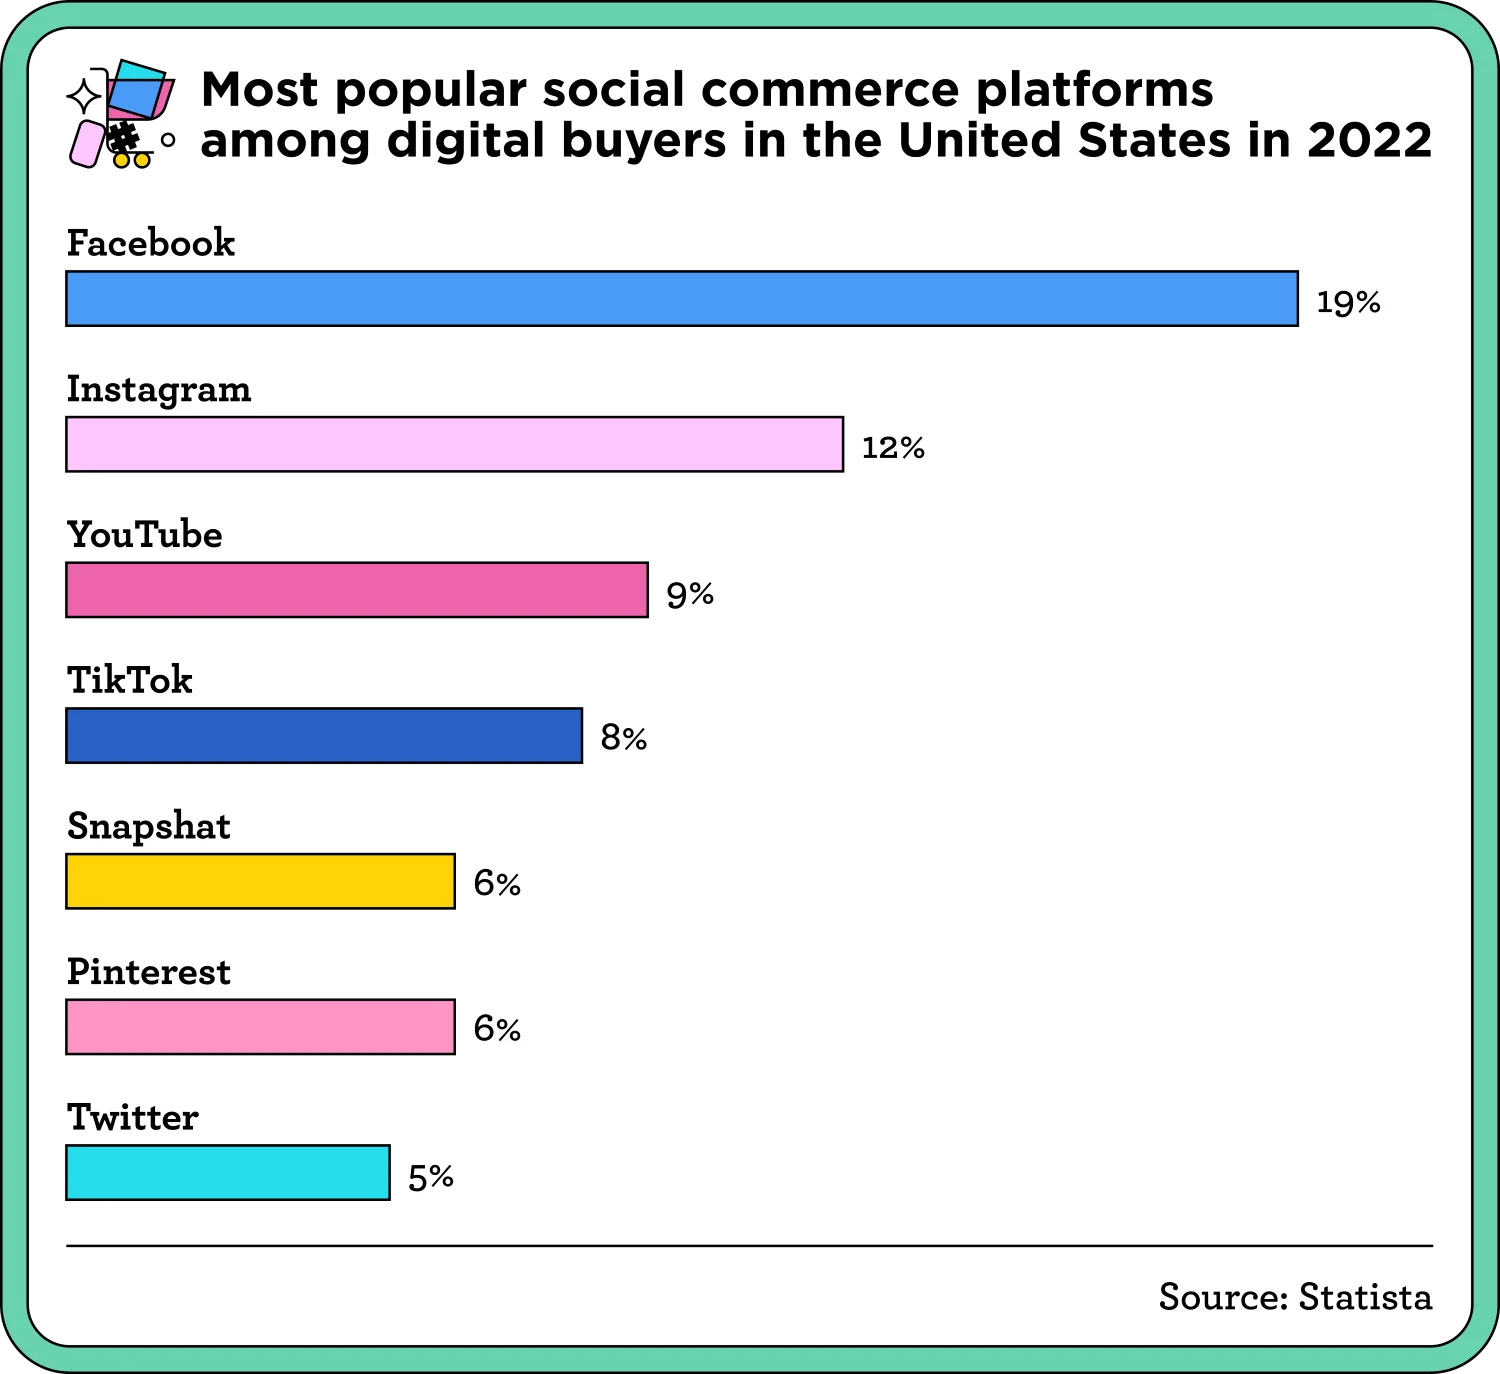 Most popular social commerce platforms among digital buyers in the United States in 2022: Facebook 19%, Instagram 12%, YouTube 9%, TikTok 8%, Snapchat 6%, Pinterest 6%, Twitter 5%